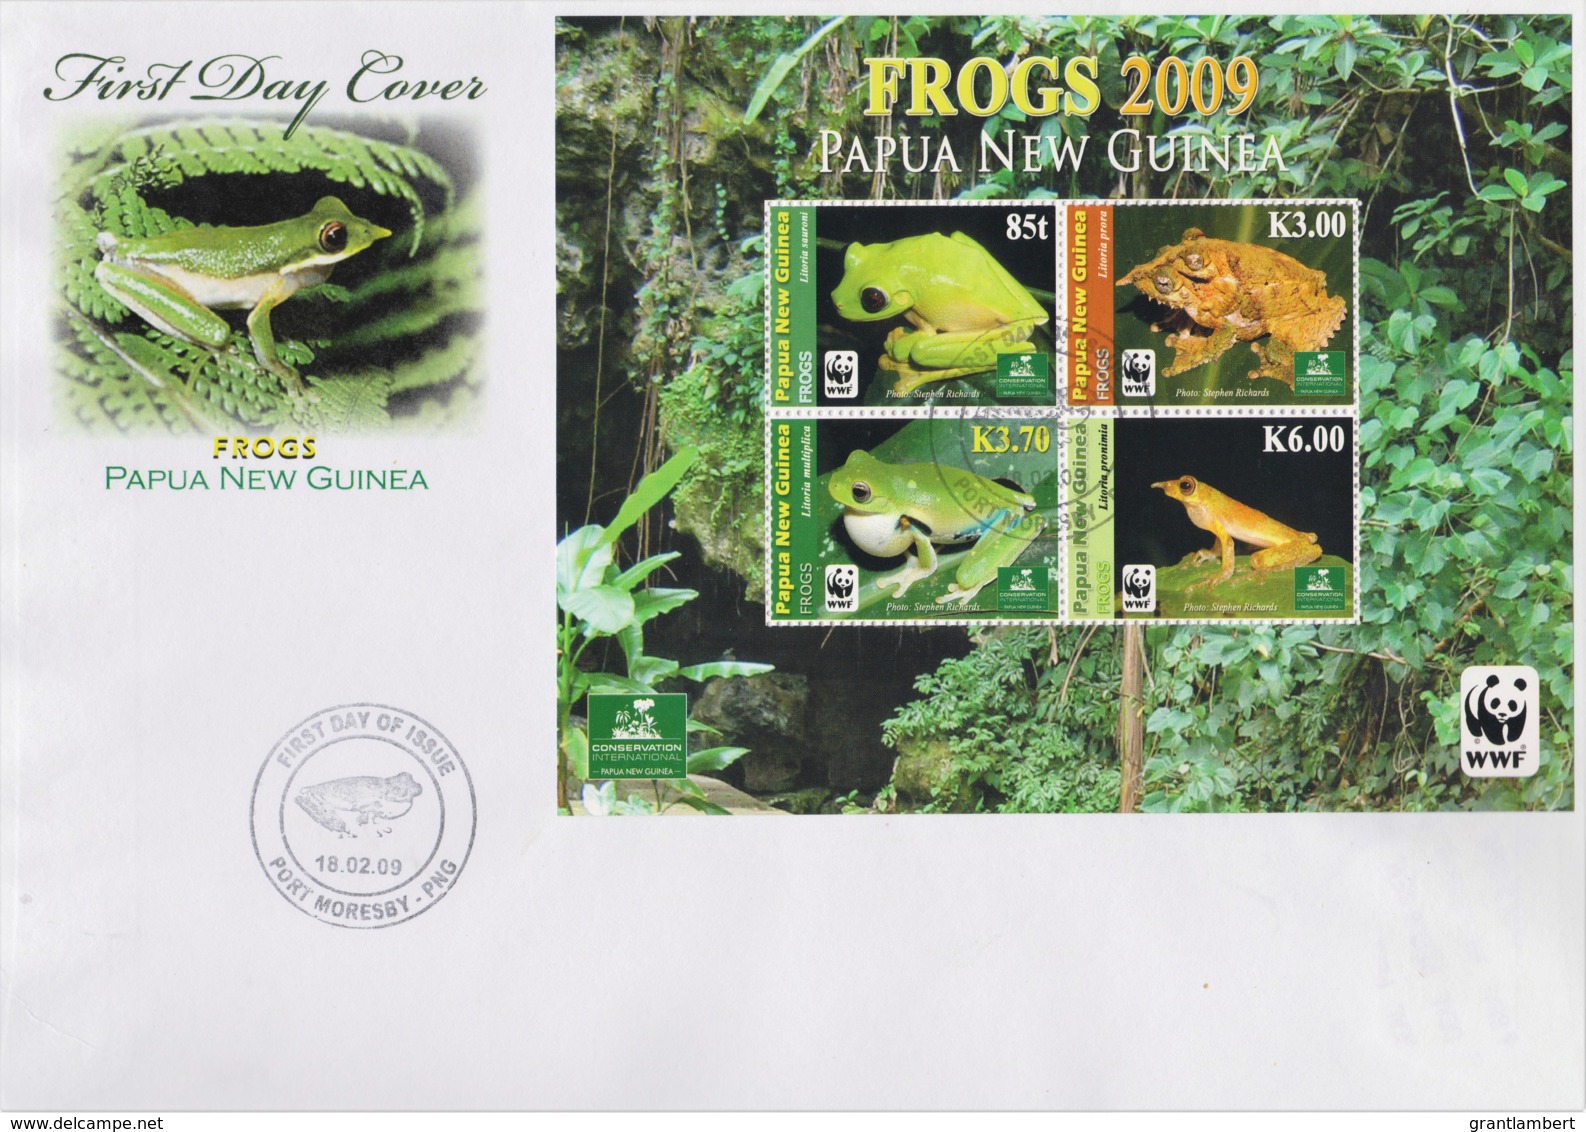 Papua New Guinea 2009 Frogs Minisheet FDC  WWF - Papoea-Nieuw-Guinea